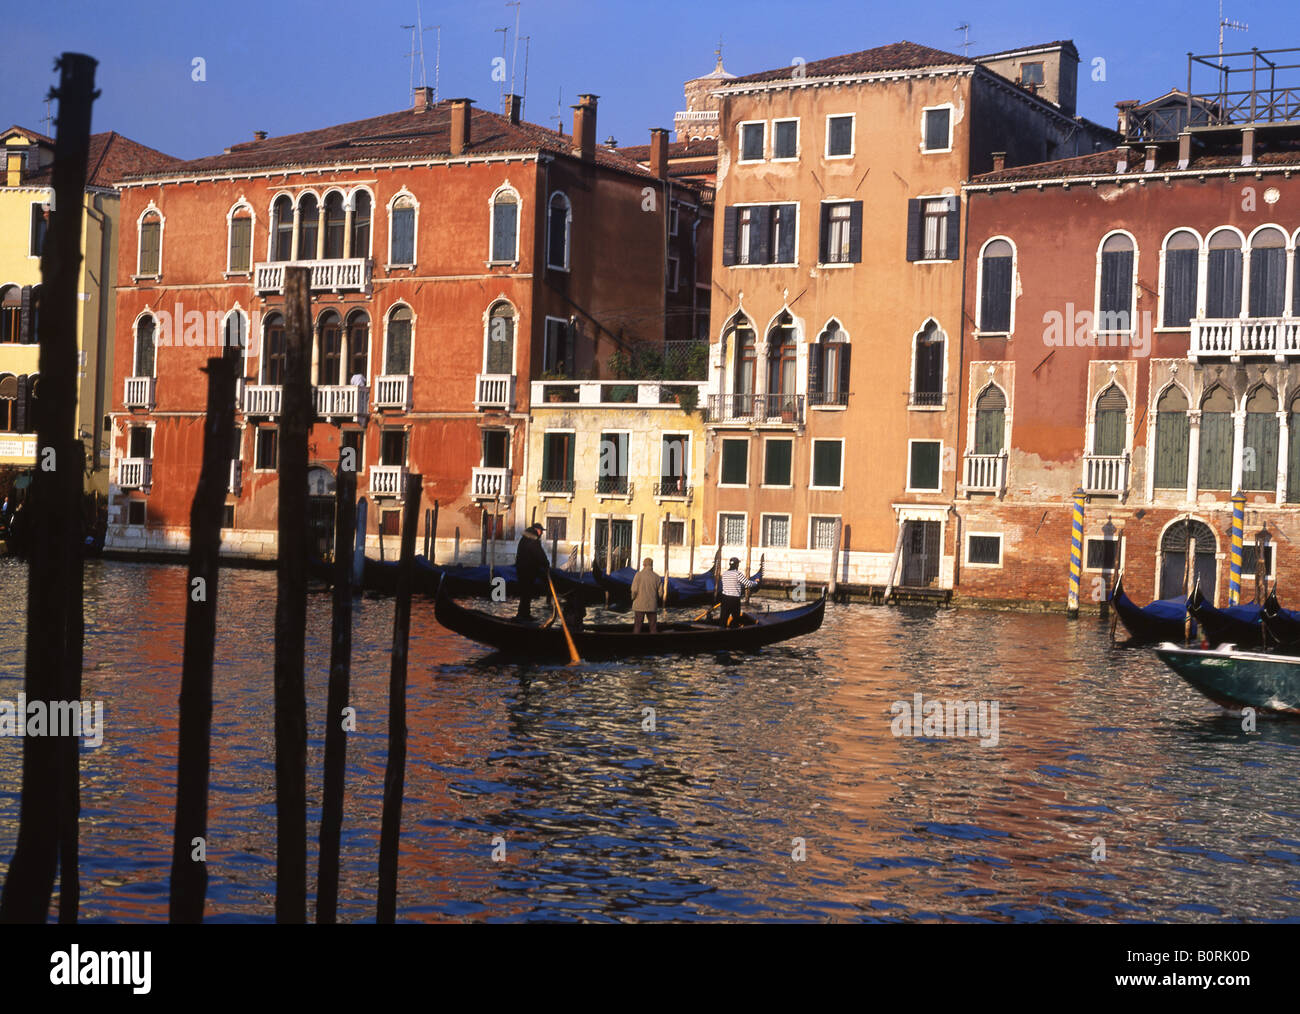 San Tomà traghetto gondola ferry on Grand Canal Venice Veneto Italy Stock Photo